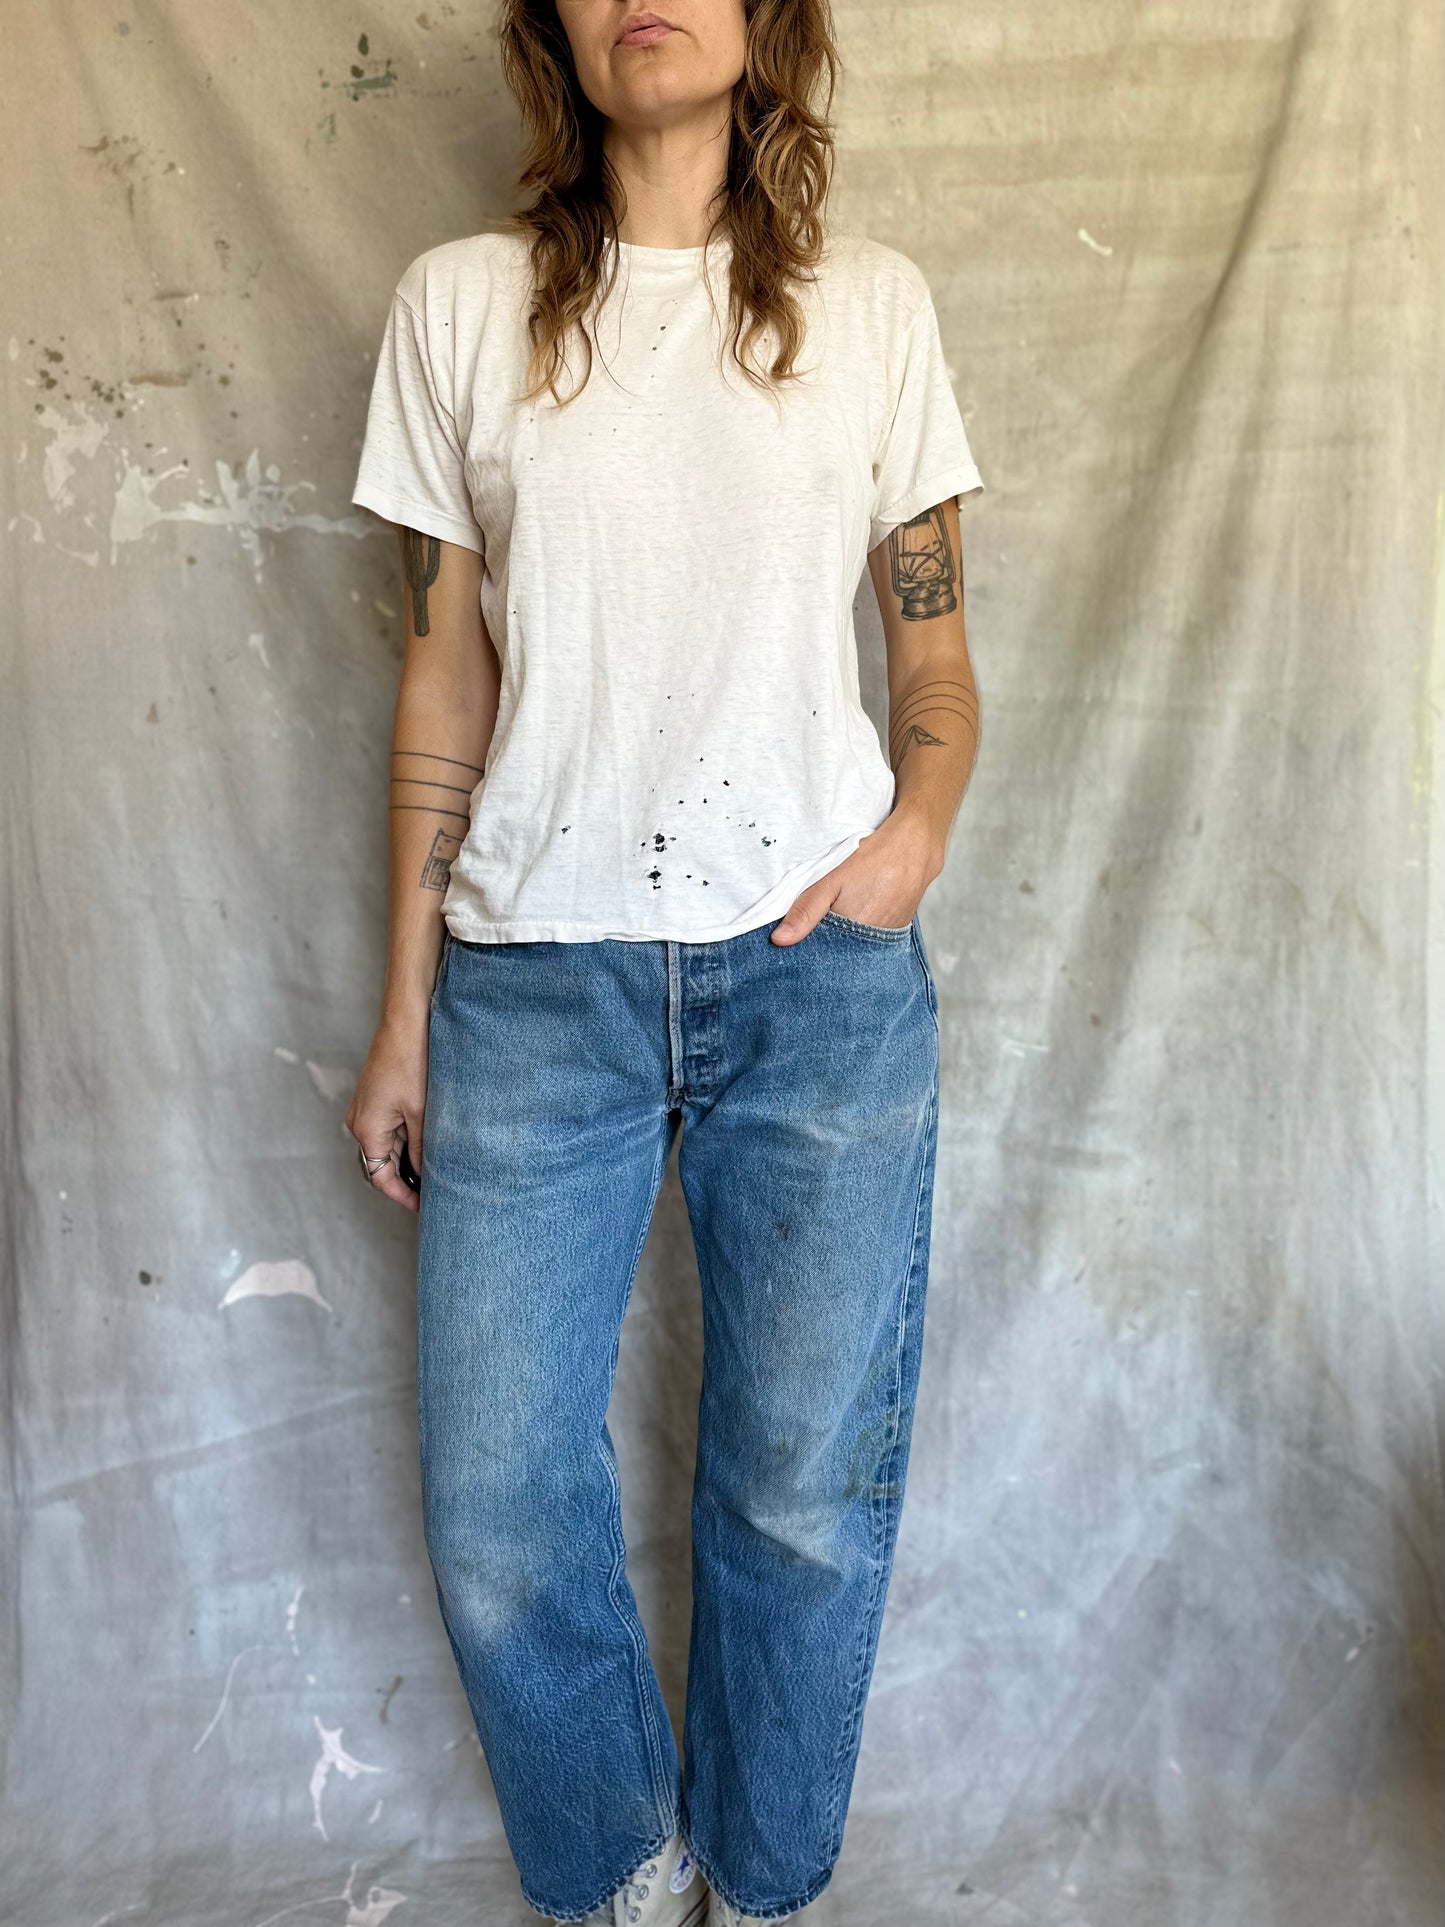 90s Levi’s 501xx Jeans